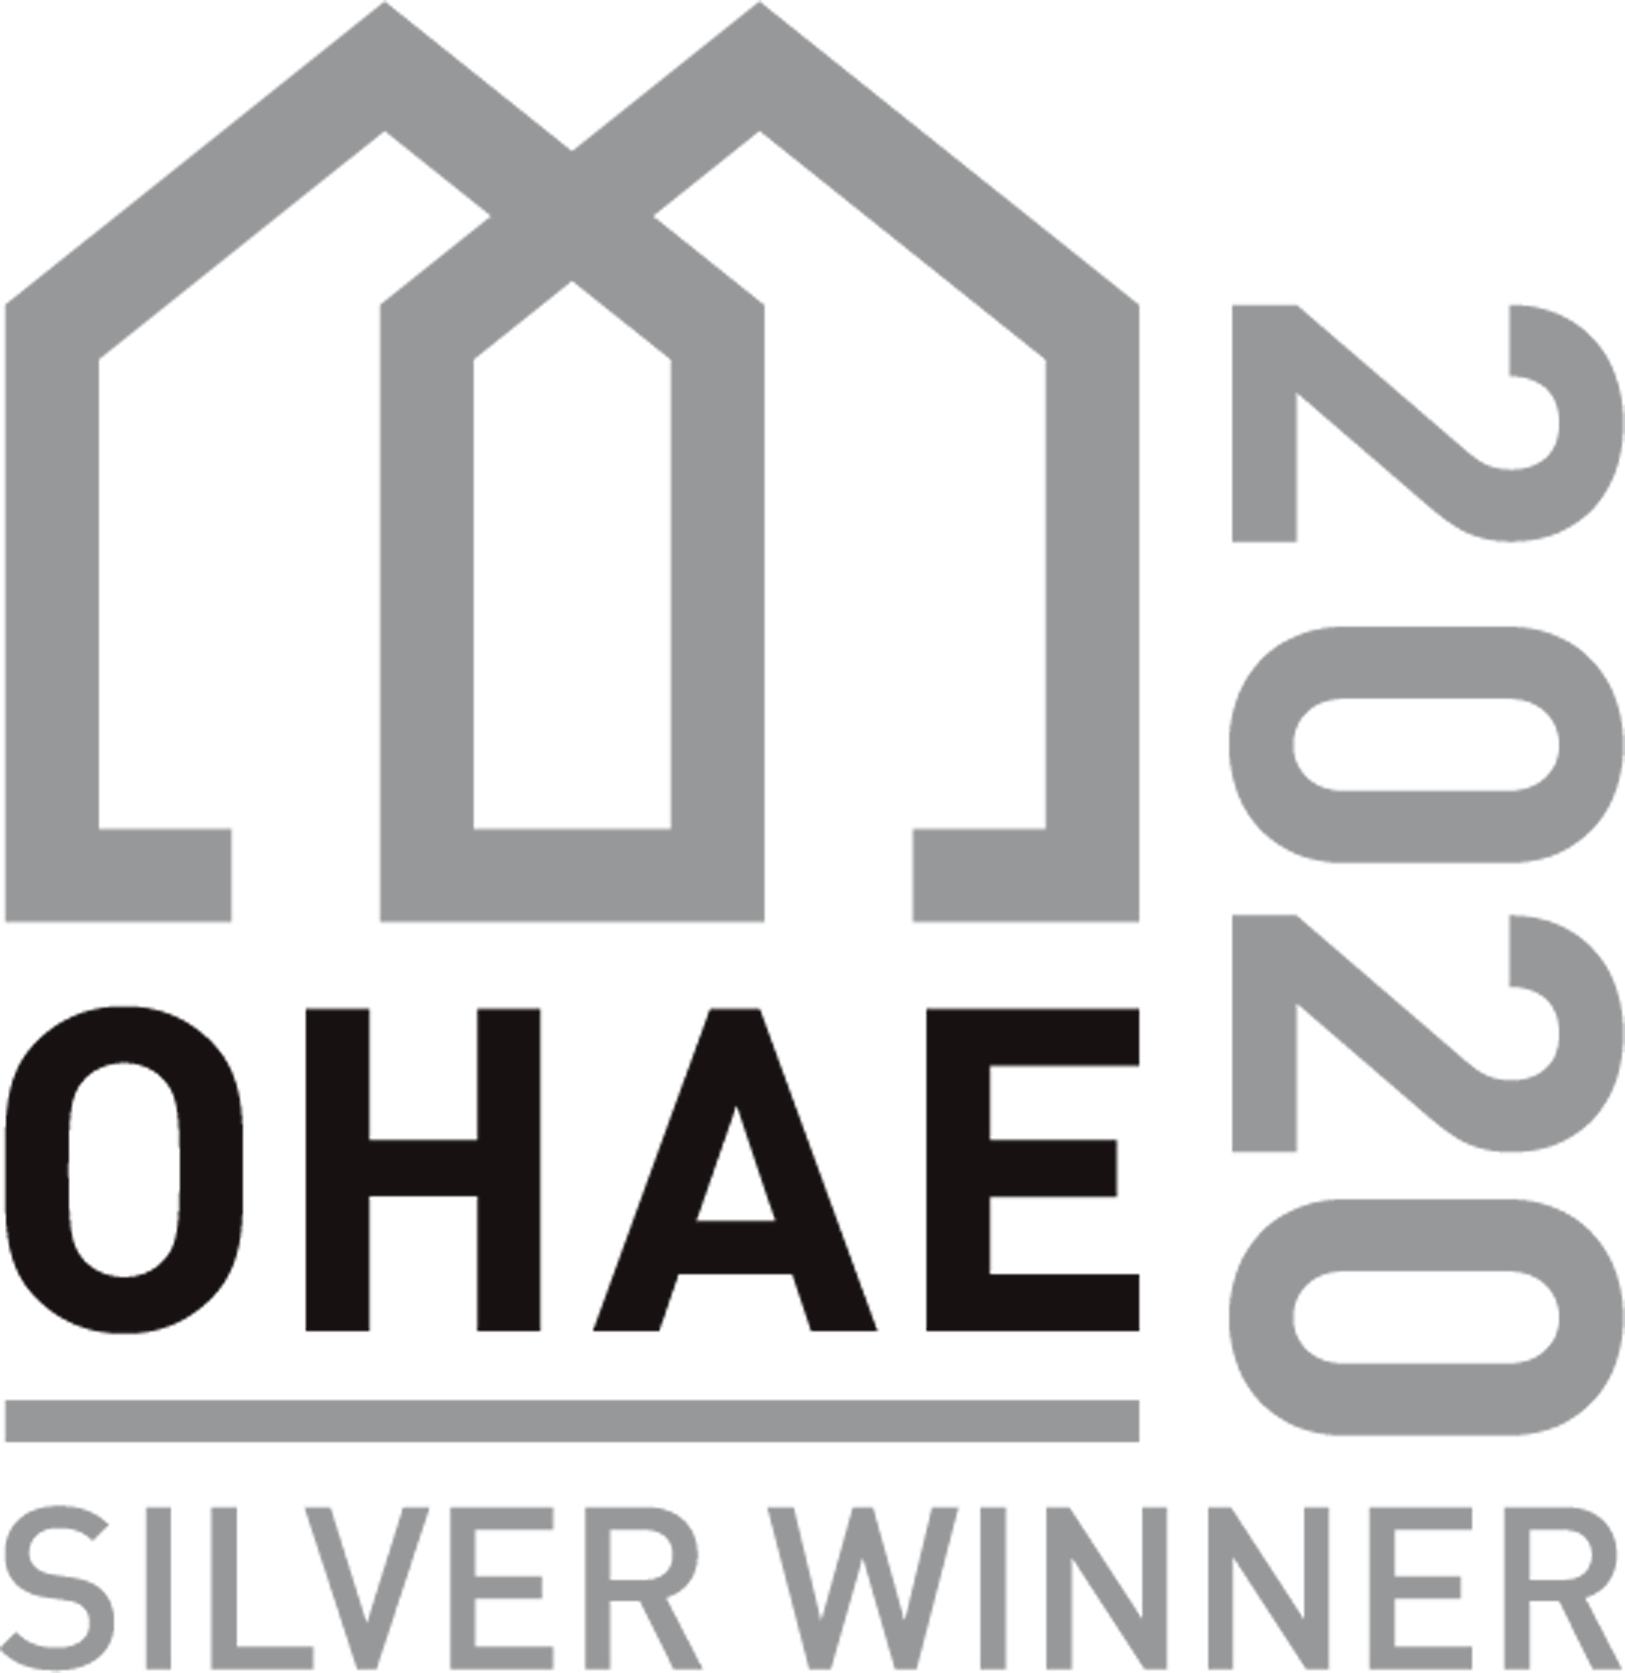 OHAE_2020_SilverWinner